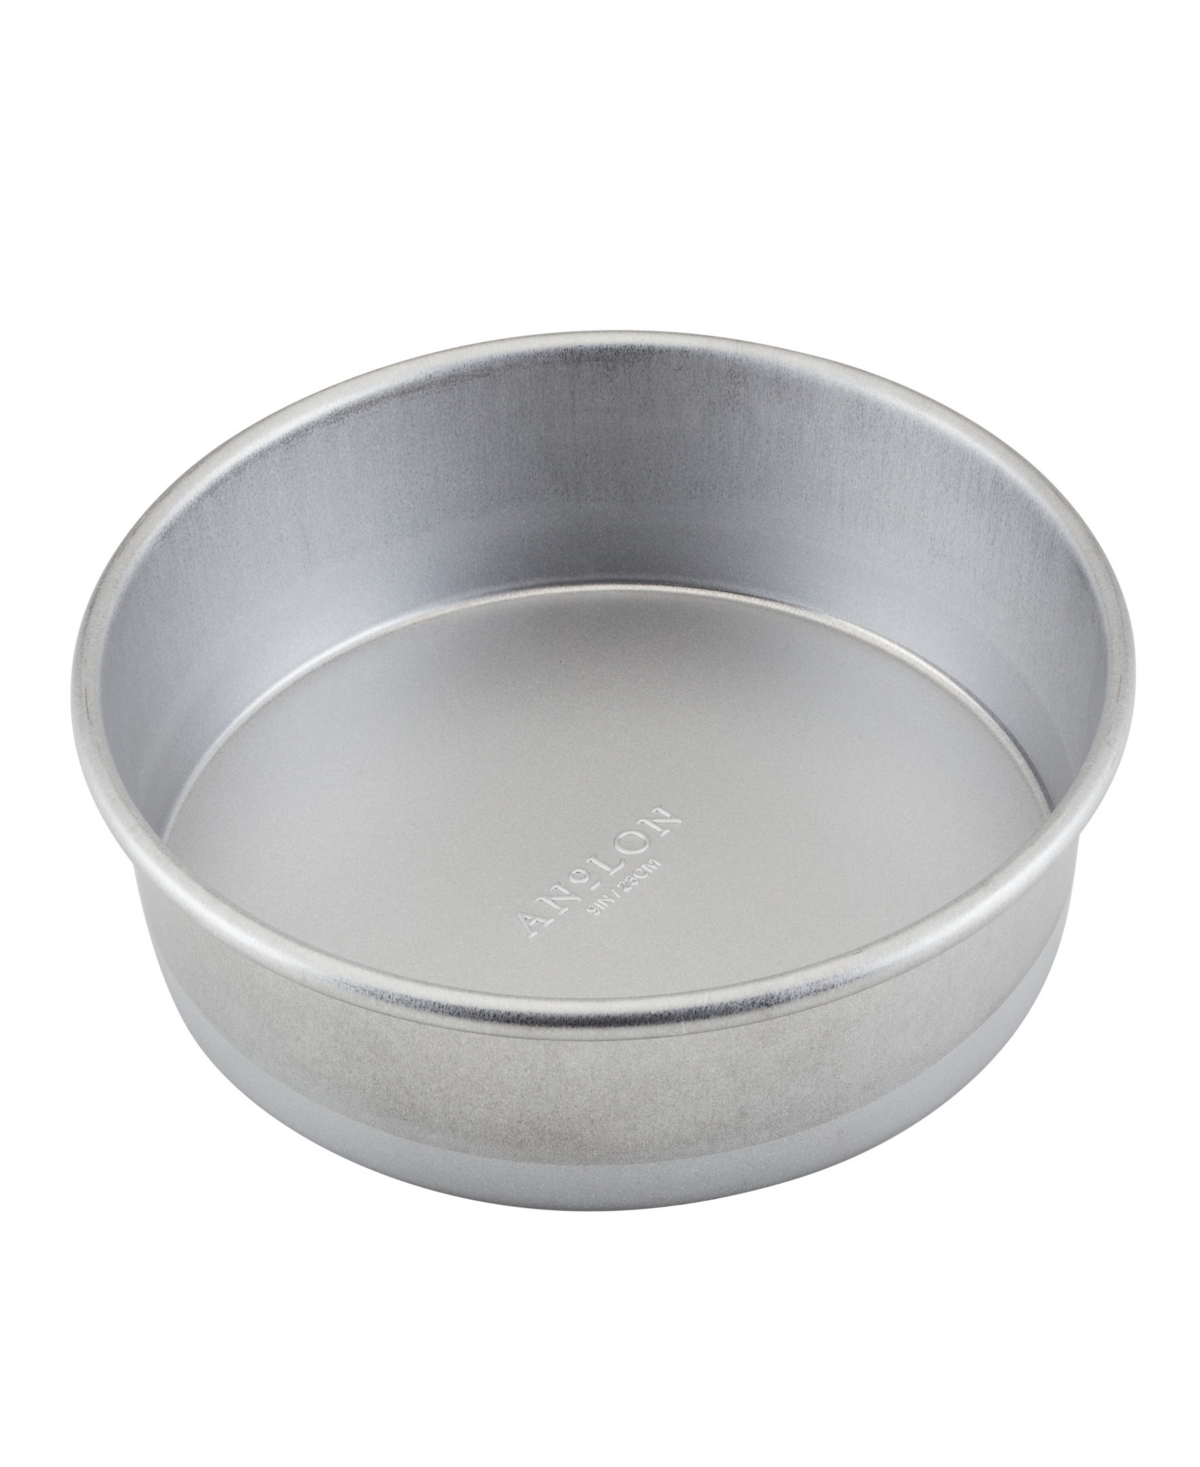 Anolon Pro-bake Bakeware Aluminized Steel Round Cake Pan, 9" In Silver-tone